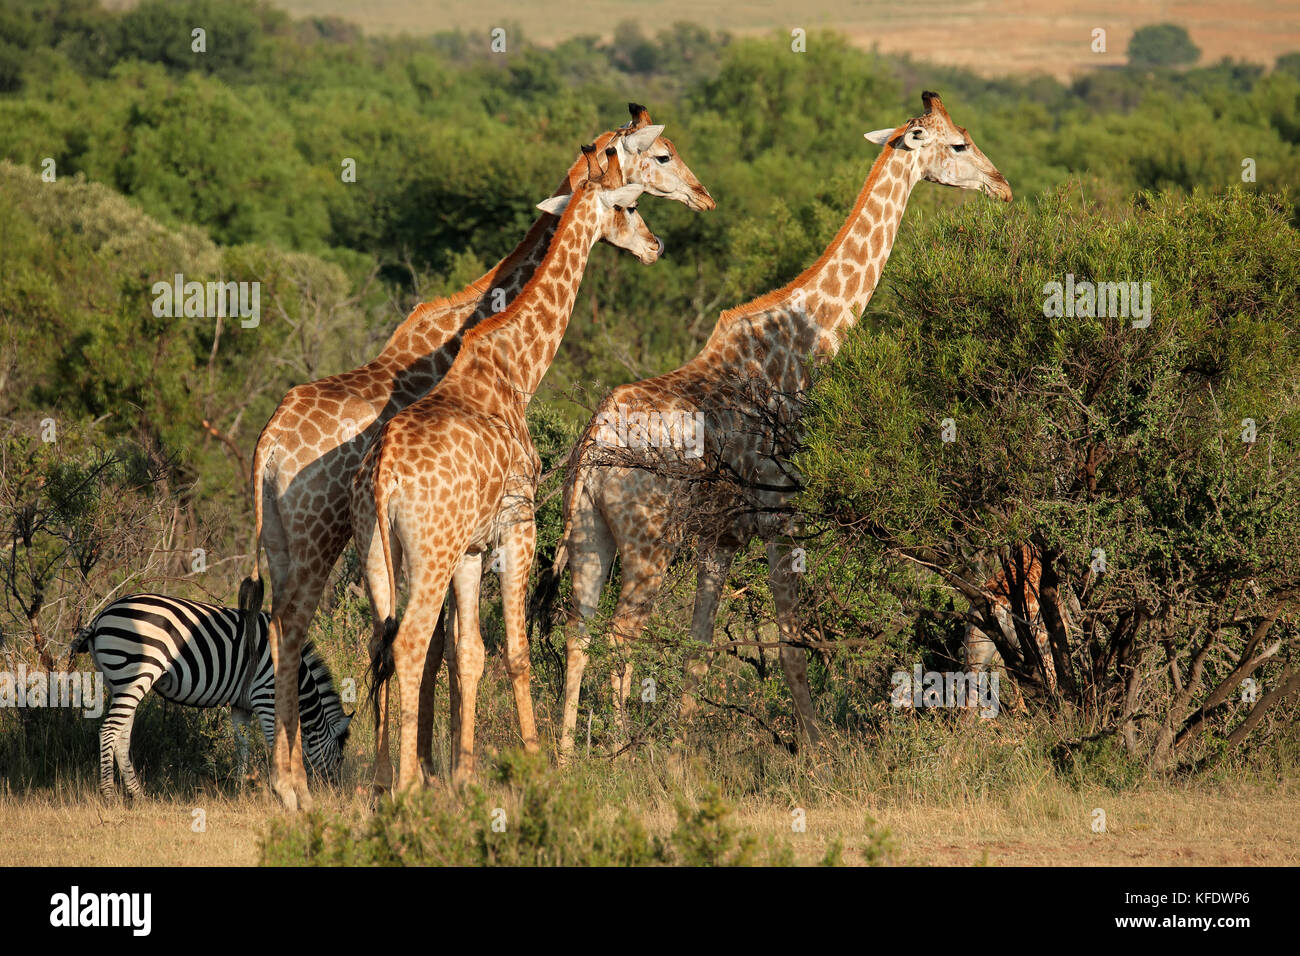 Les Girafes (Giraffa camelopardalis) dans l'habitat naturel, l'Afrique du Sud Banque D'Images